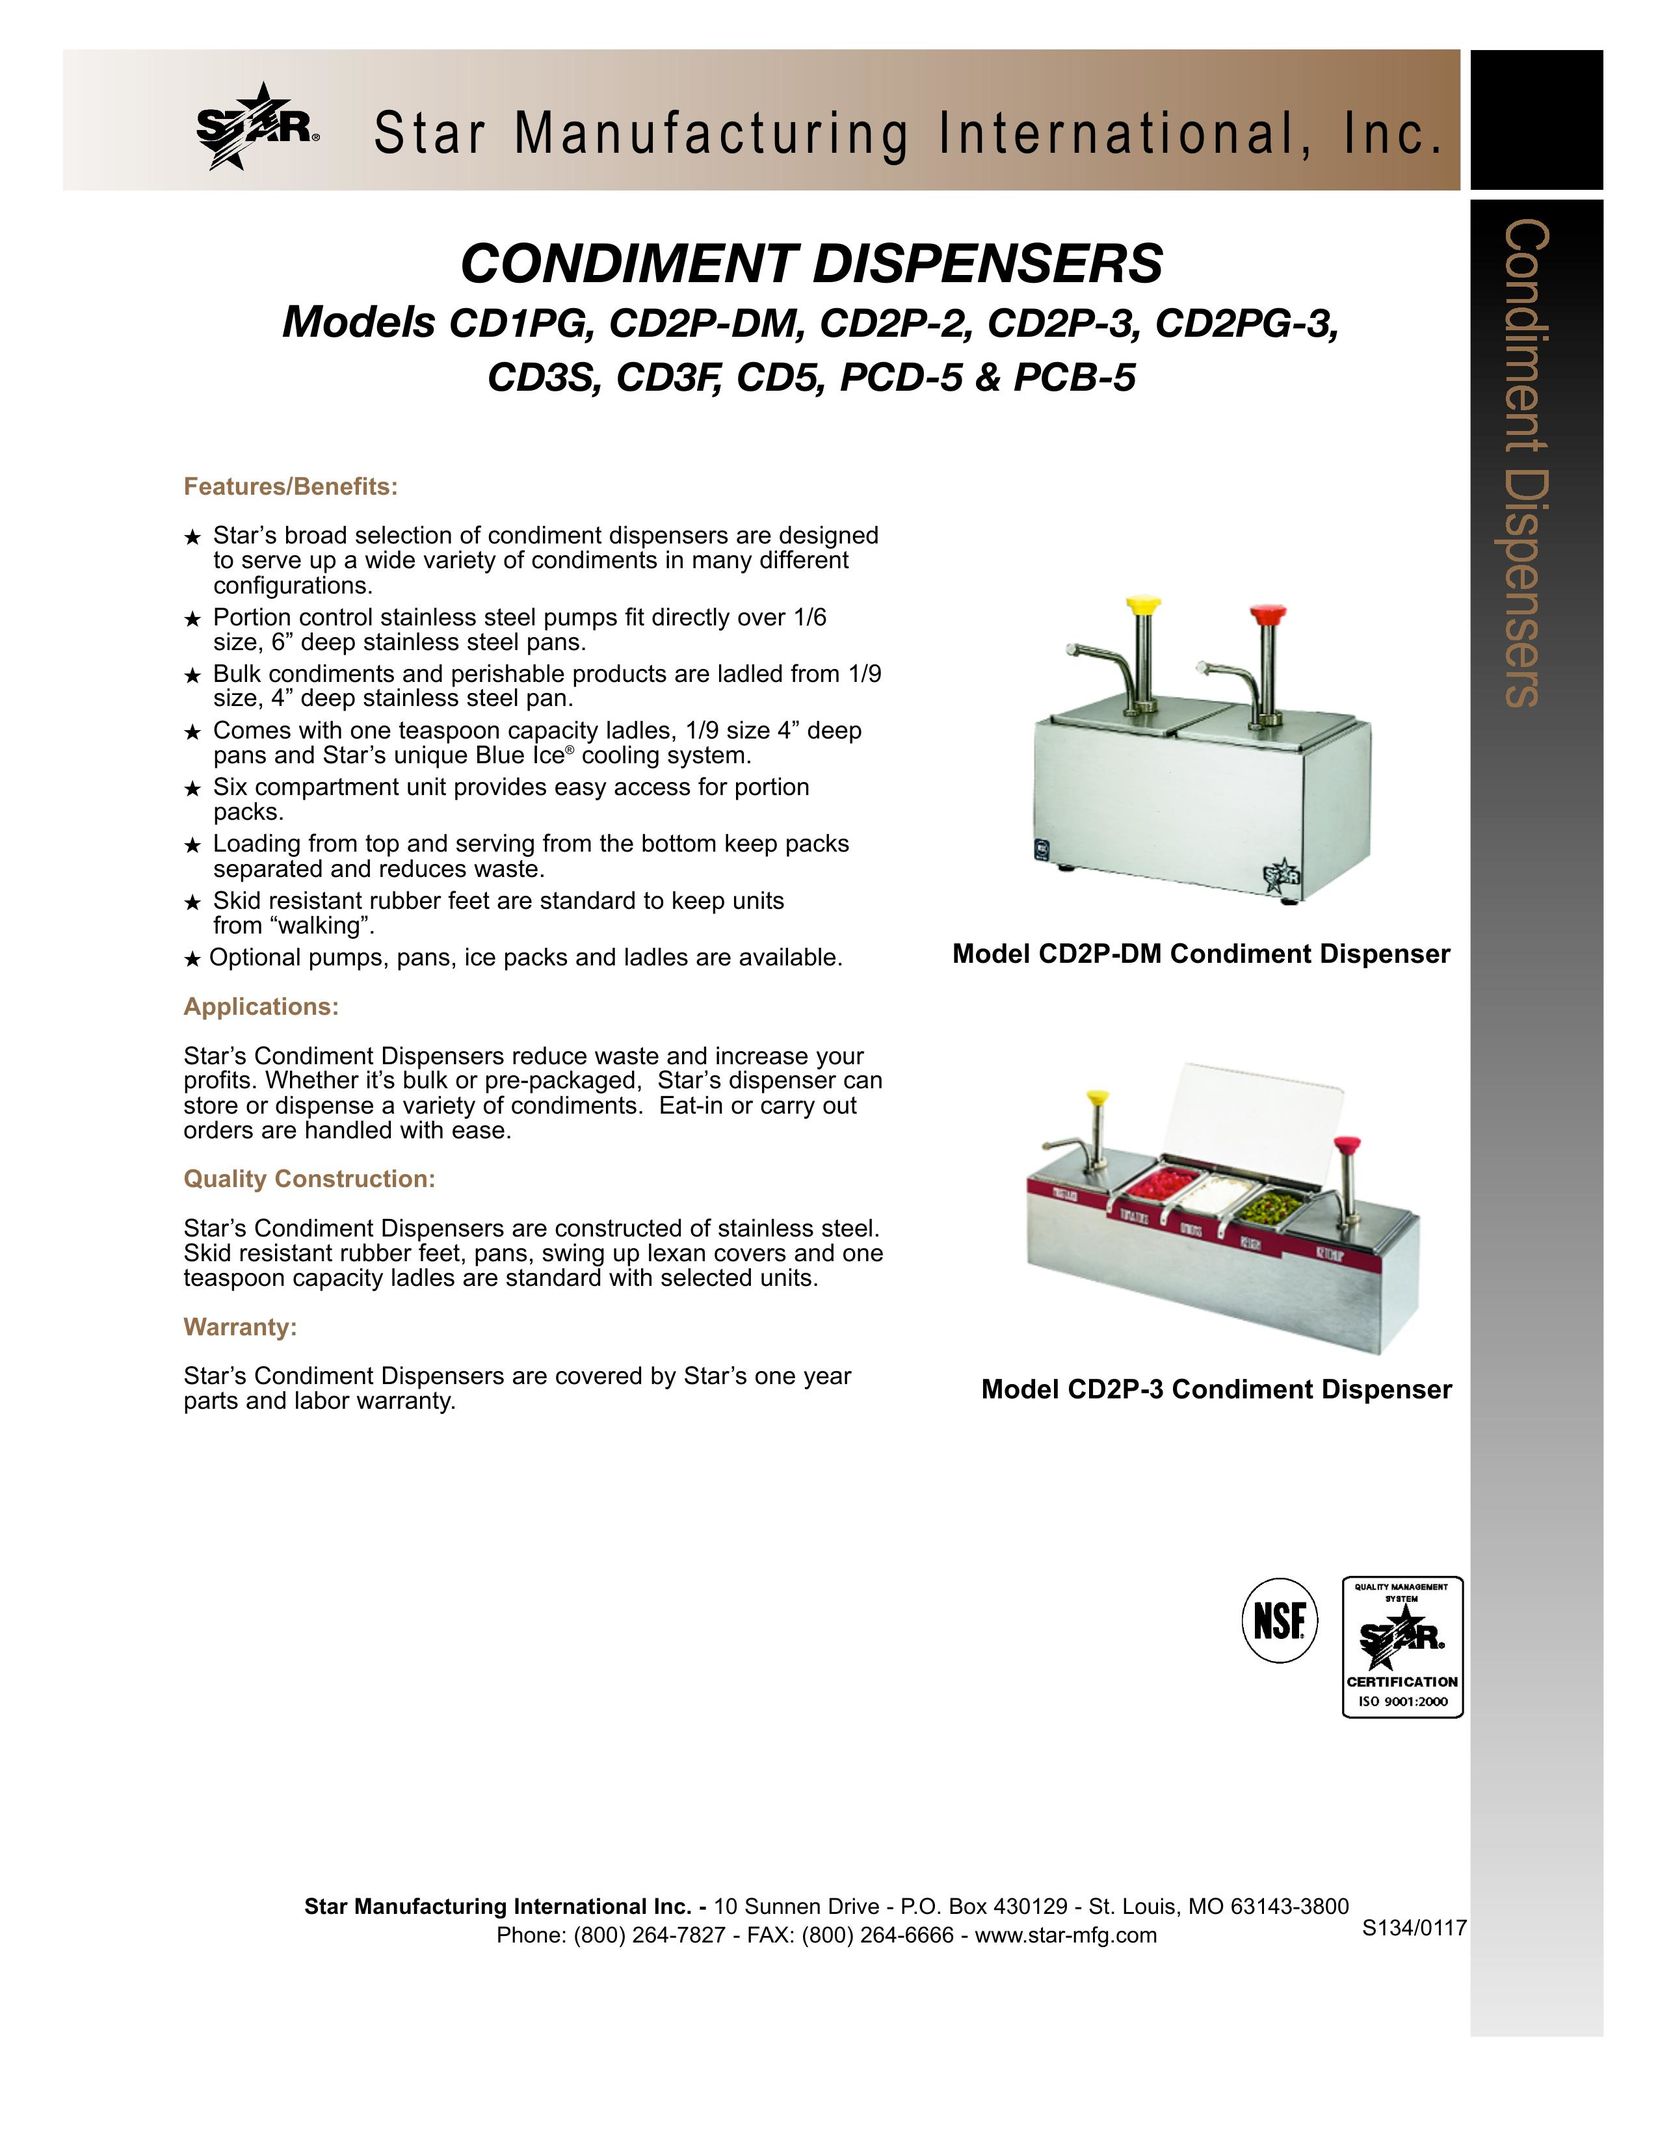 Star Manufacturing CD2P-2 Beverage Dispenser User Manual